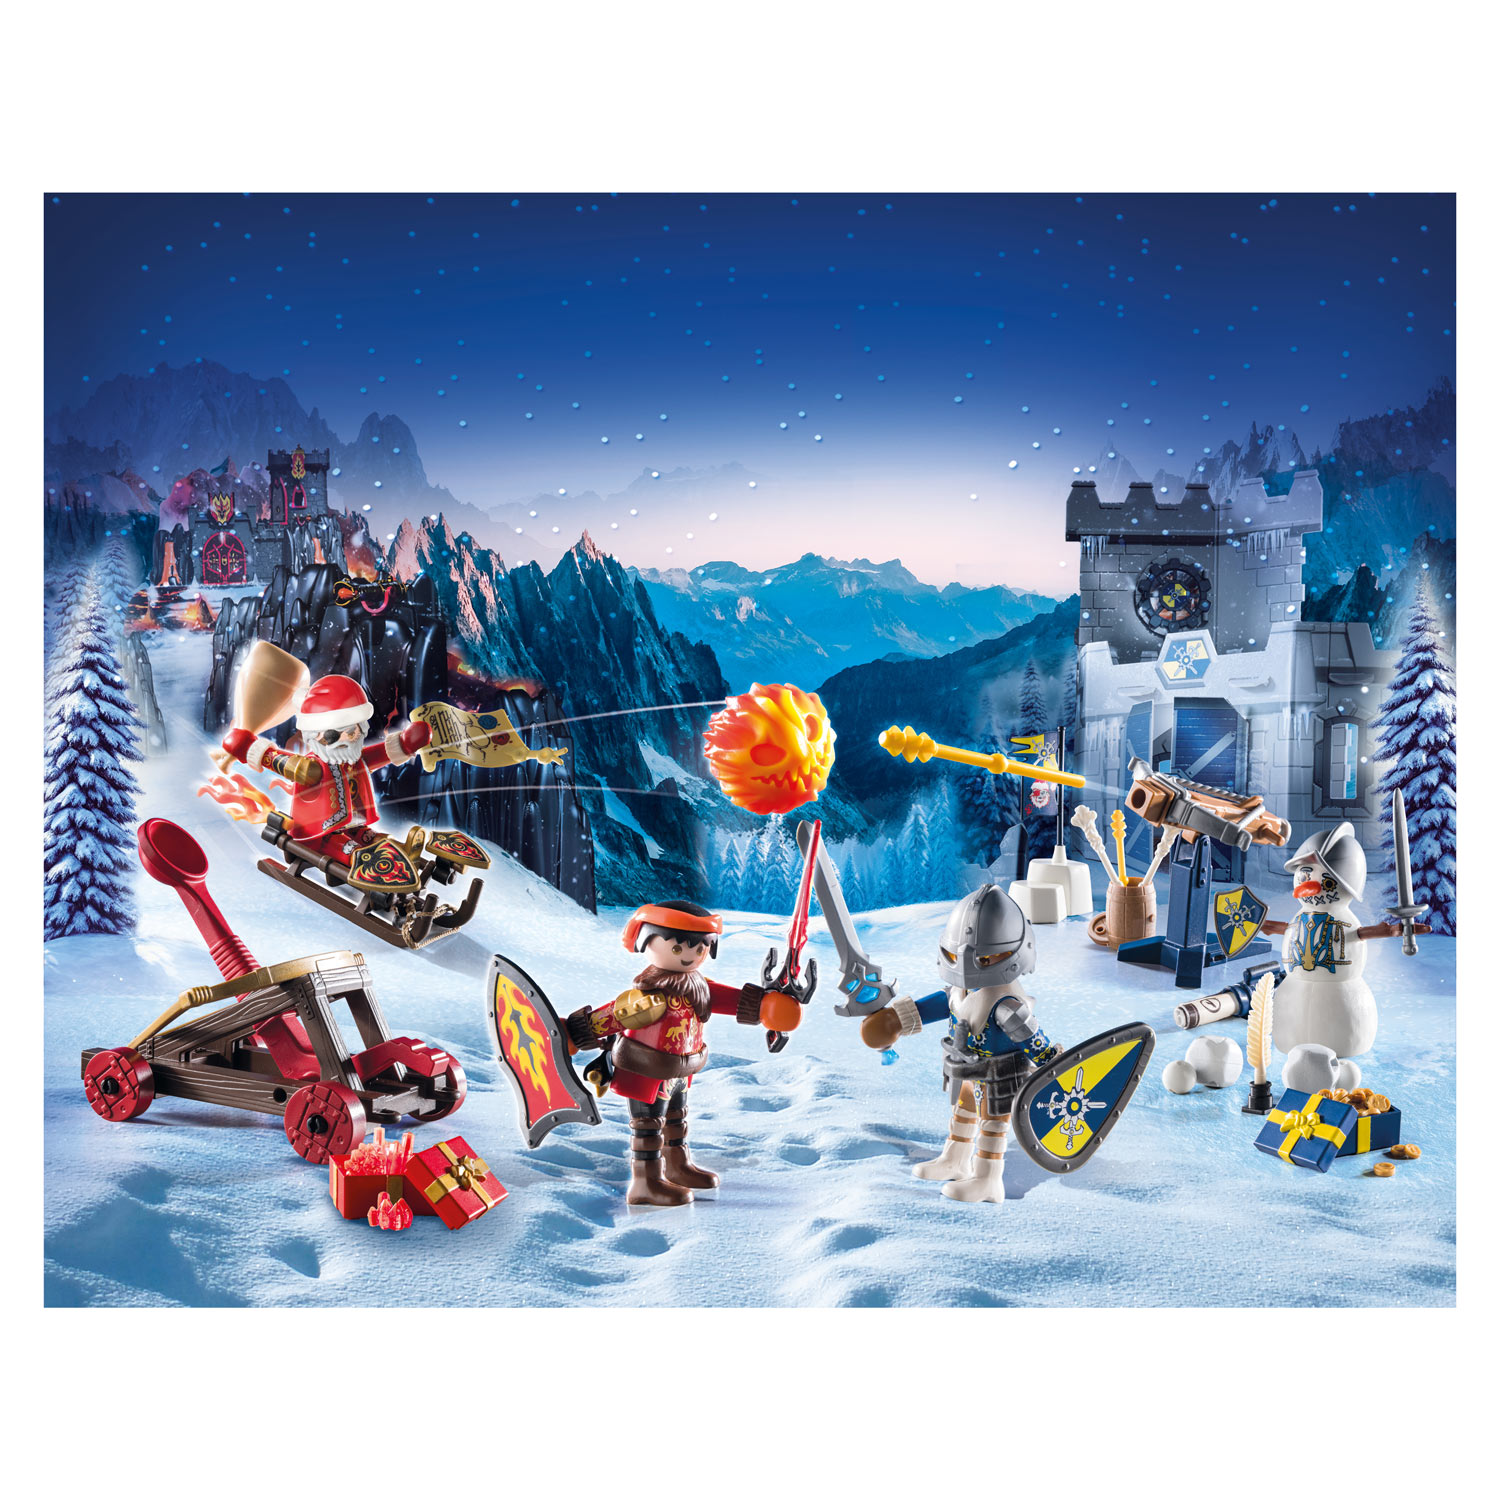 Playmobil Advent Calendar Novelmore - Battle in The Snow